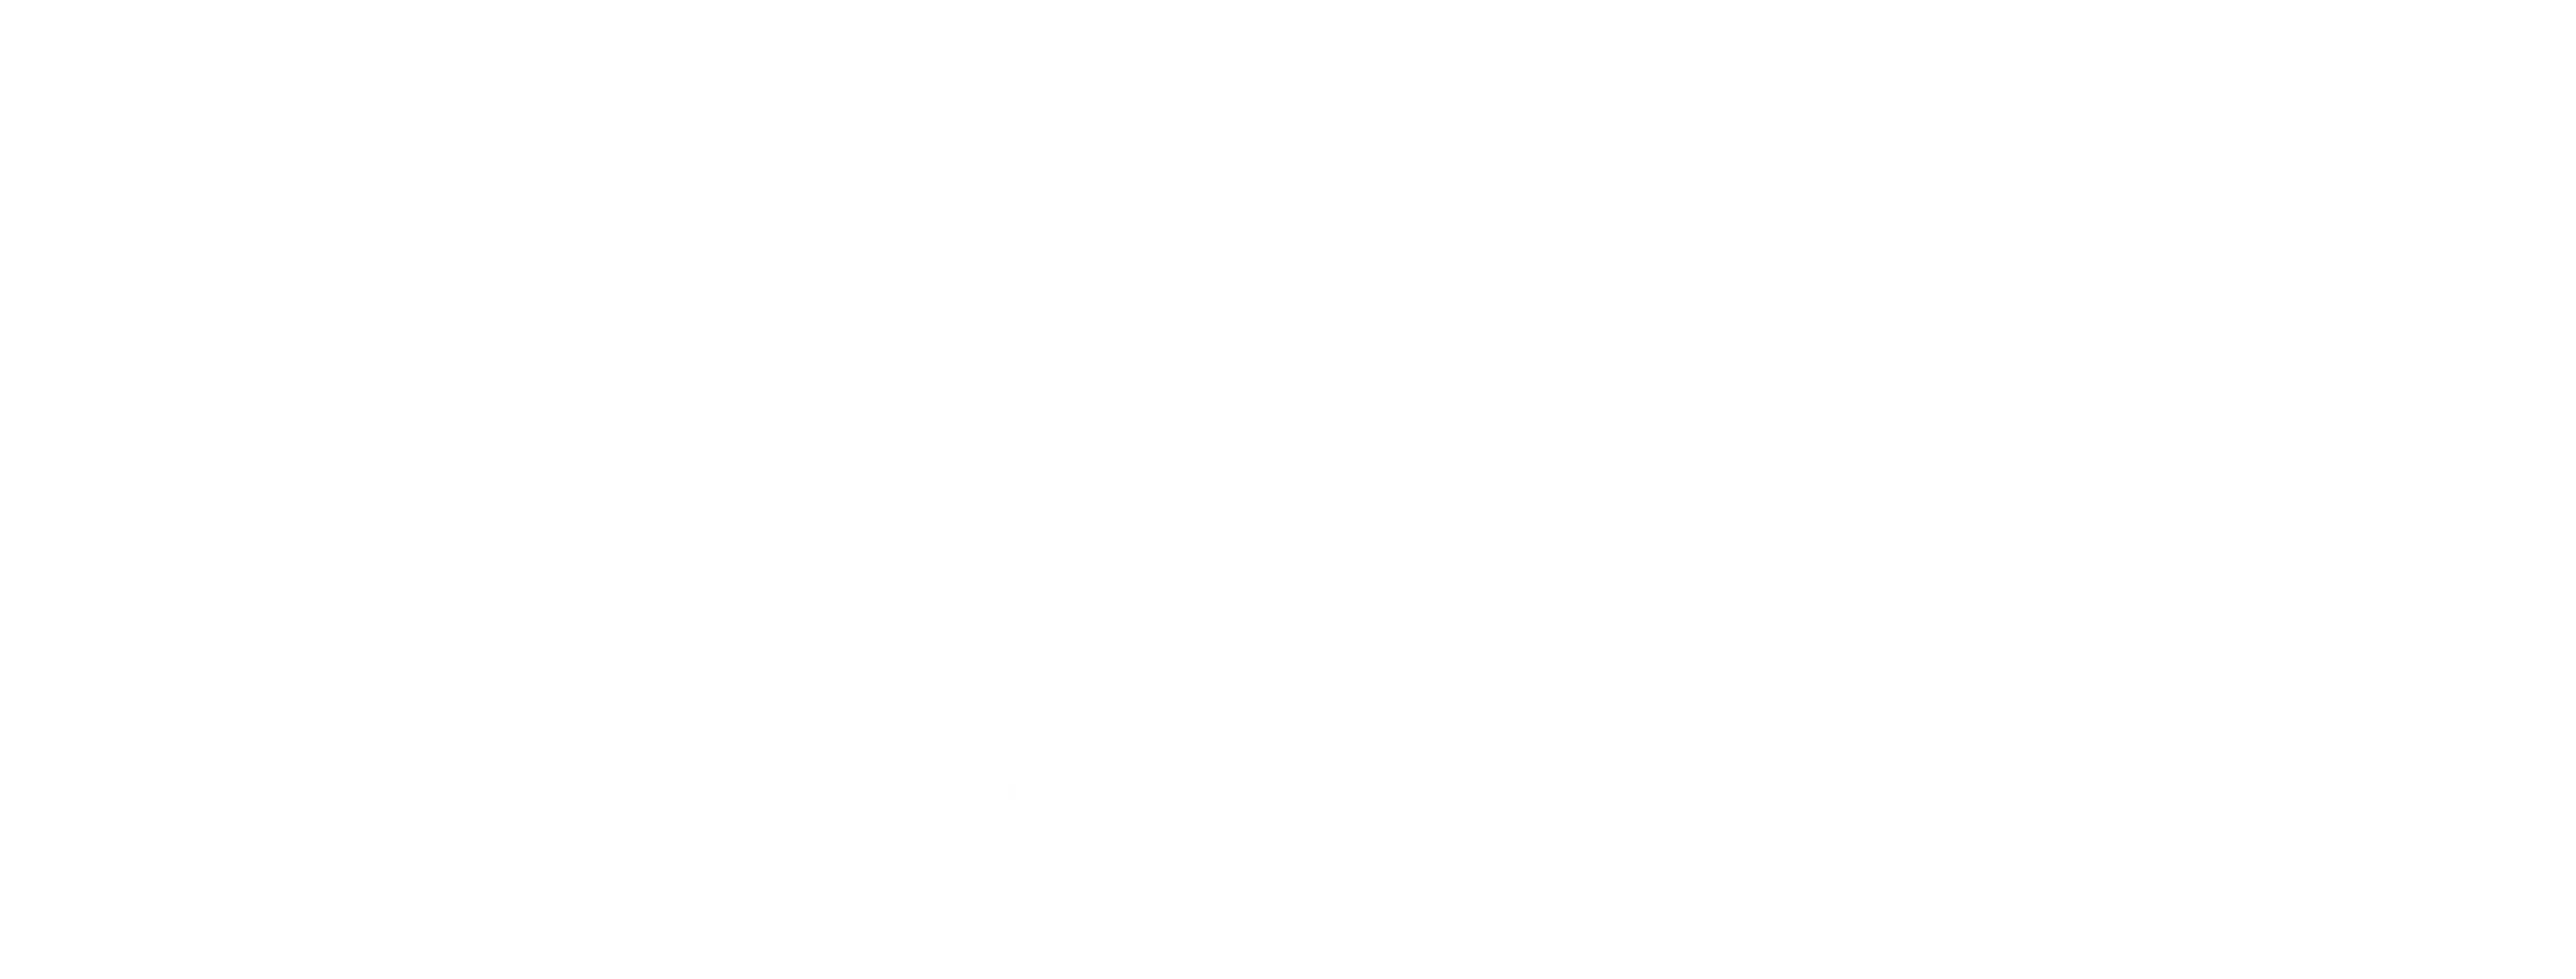 Trojan Wake Ski Snow logo